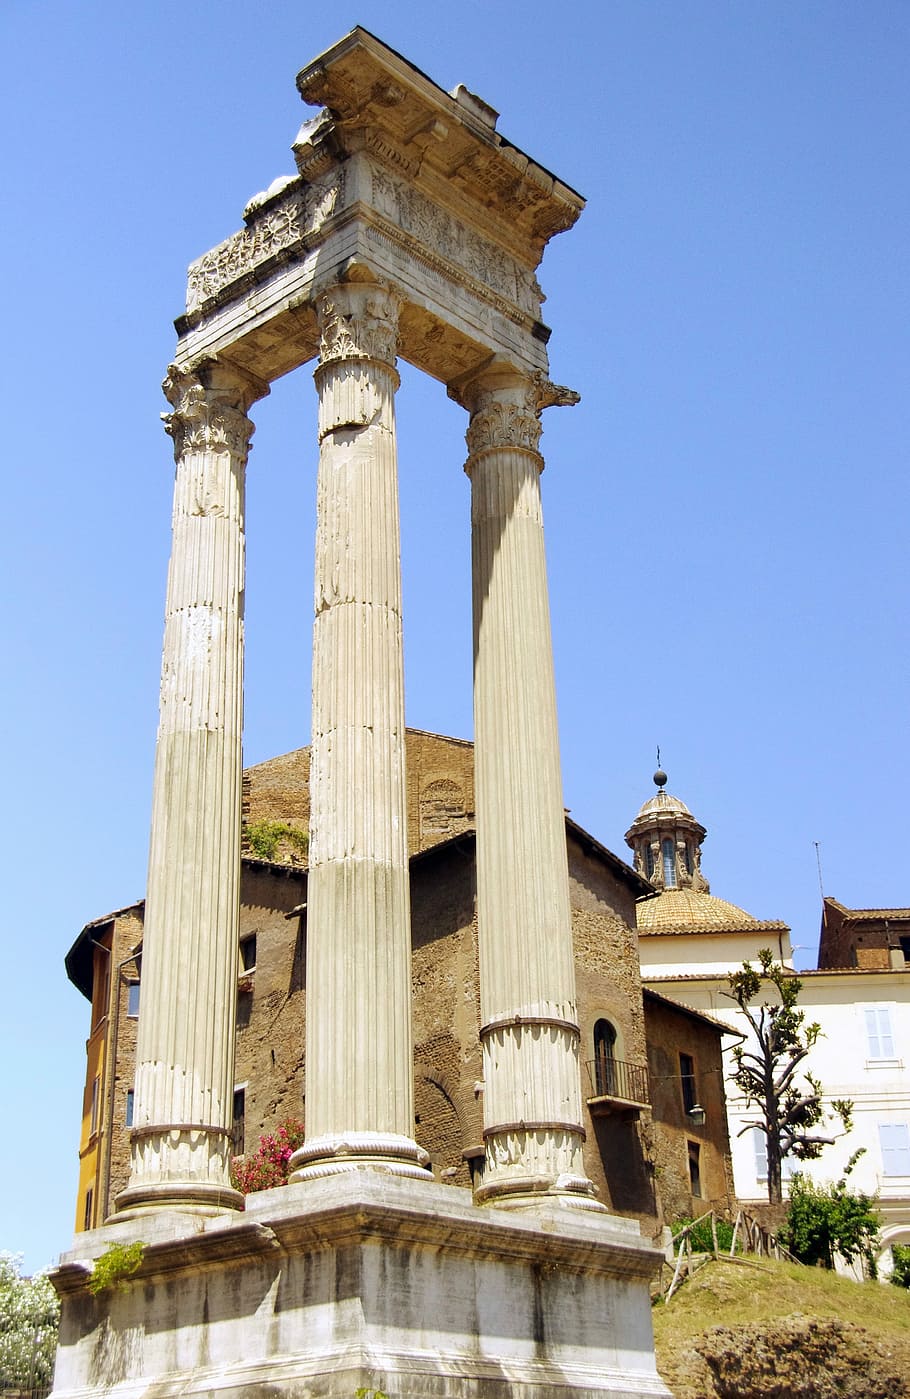 italy, rome, forum, columns, marble, antique, ancient rome, architecture, sky, built structure